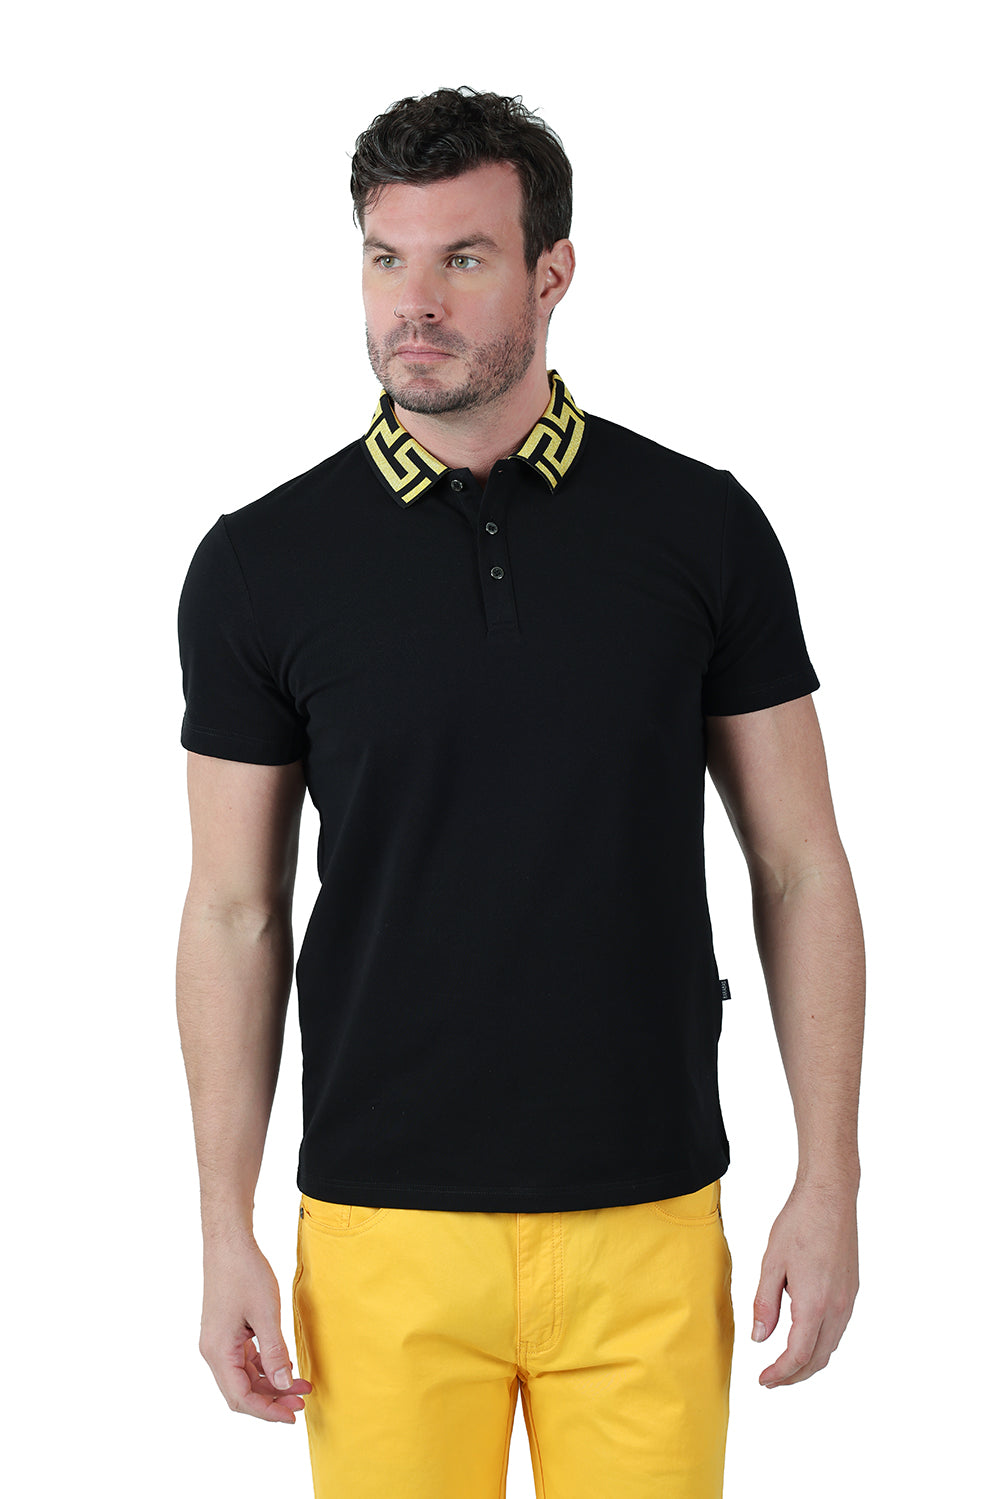 Barabas Men's Greek Key Printed Pattern Designer Polo Shirts PS121 Black Gold